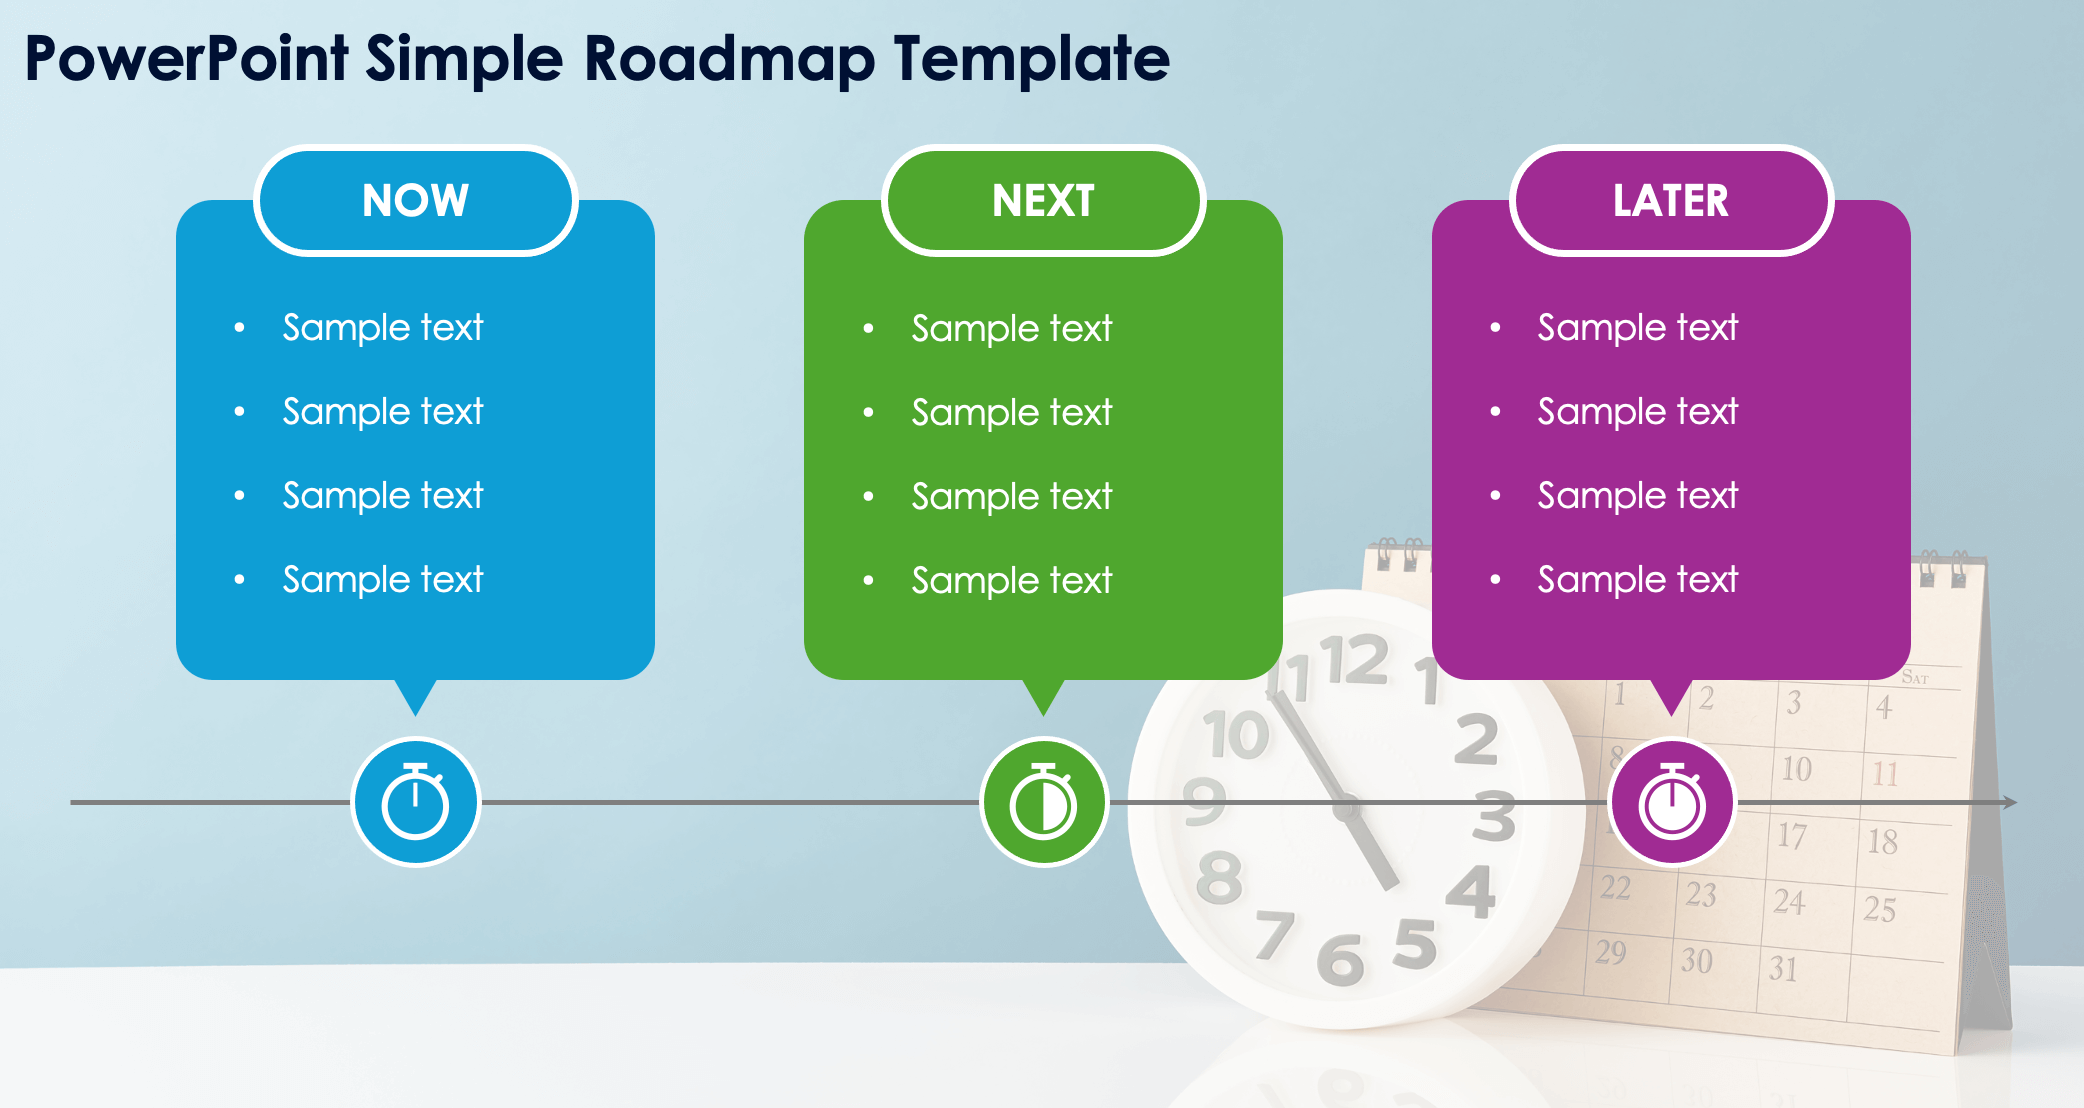 PowerPoint Simple Roadmap Template